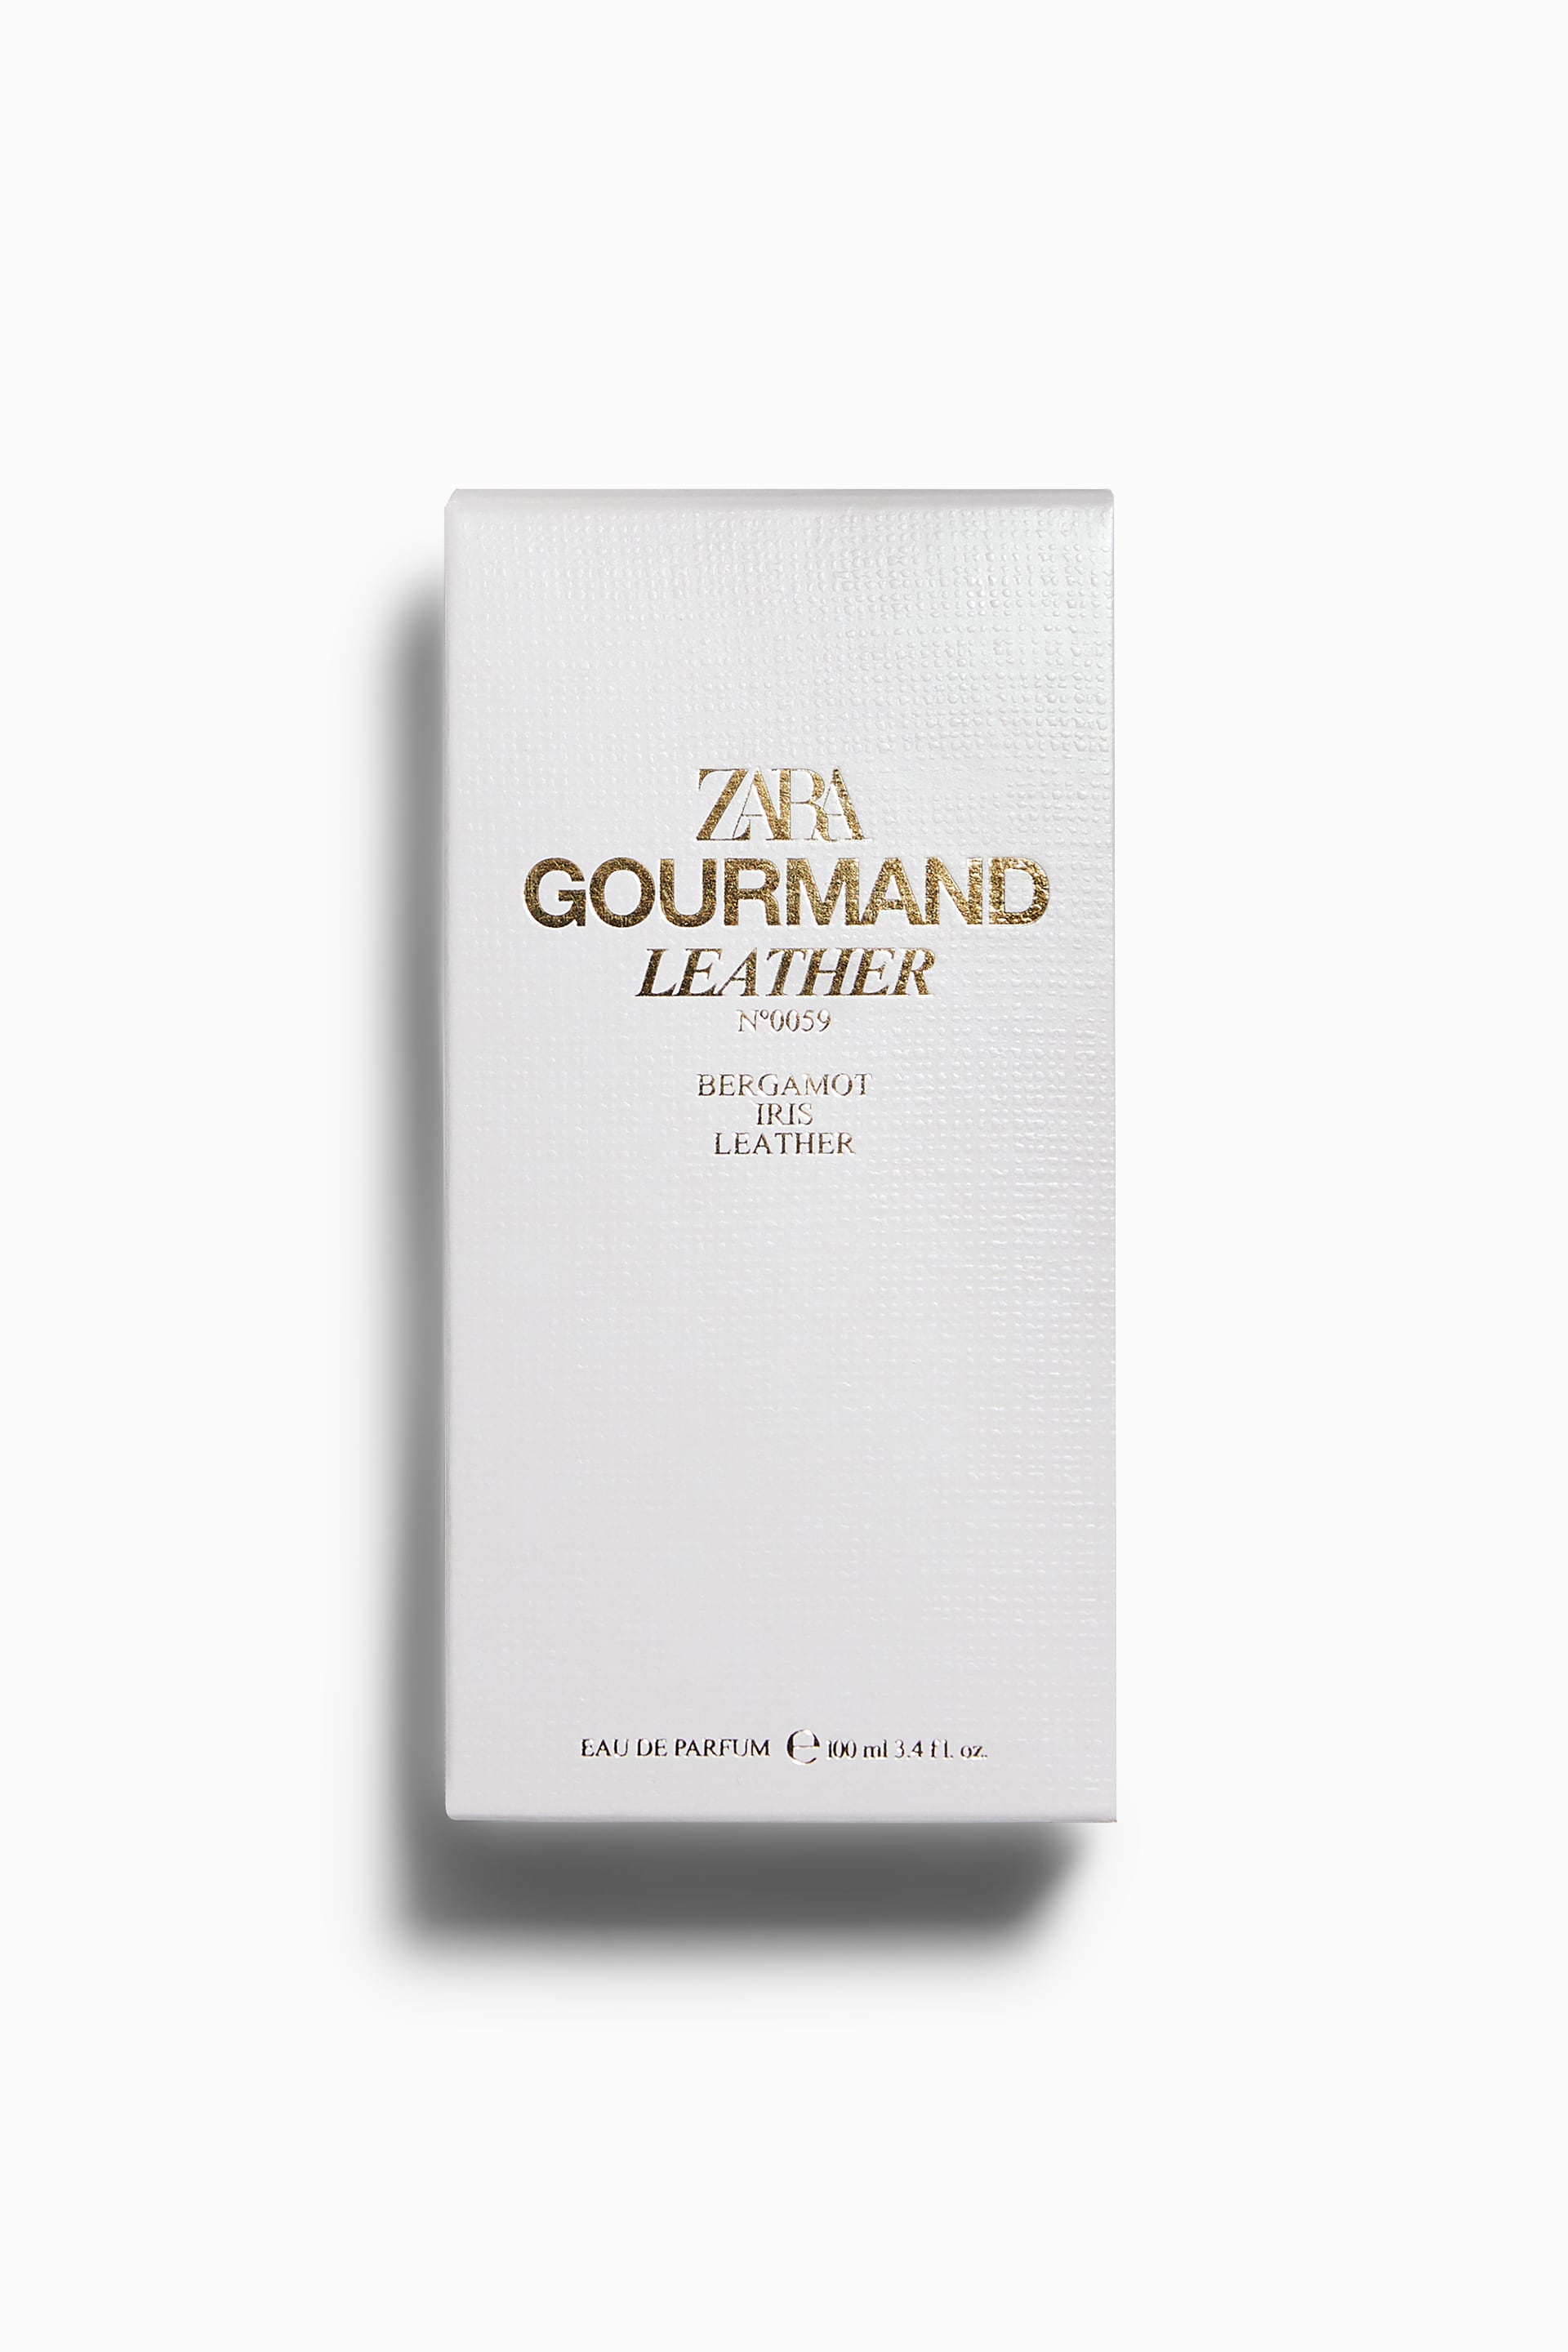 ZARA GOURMAND LEATHER PERFUME 100ML